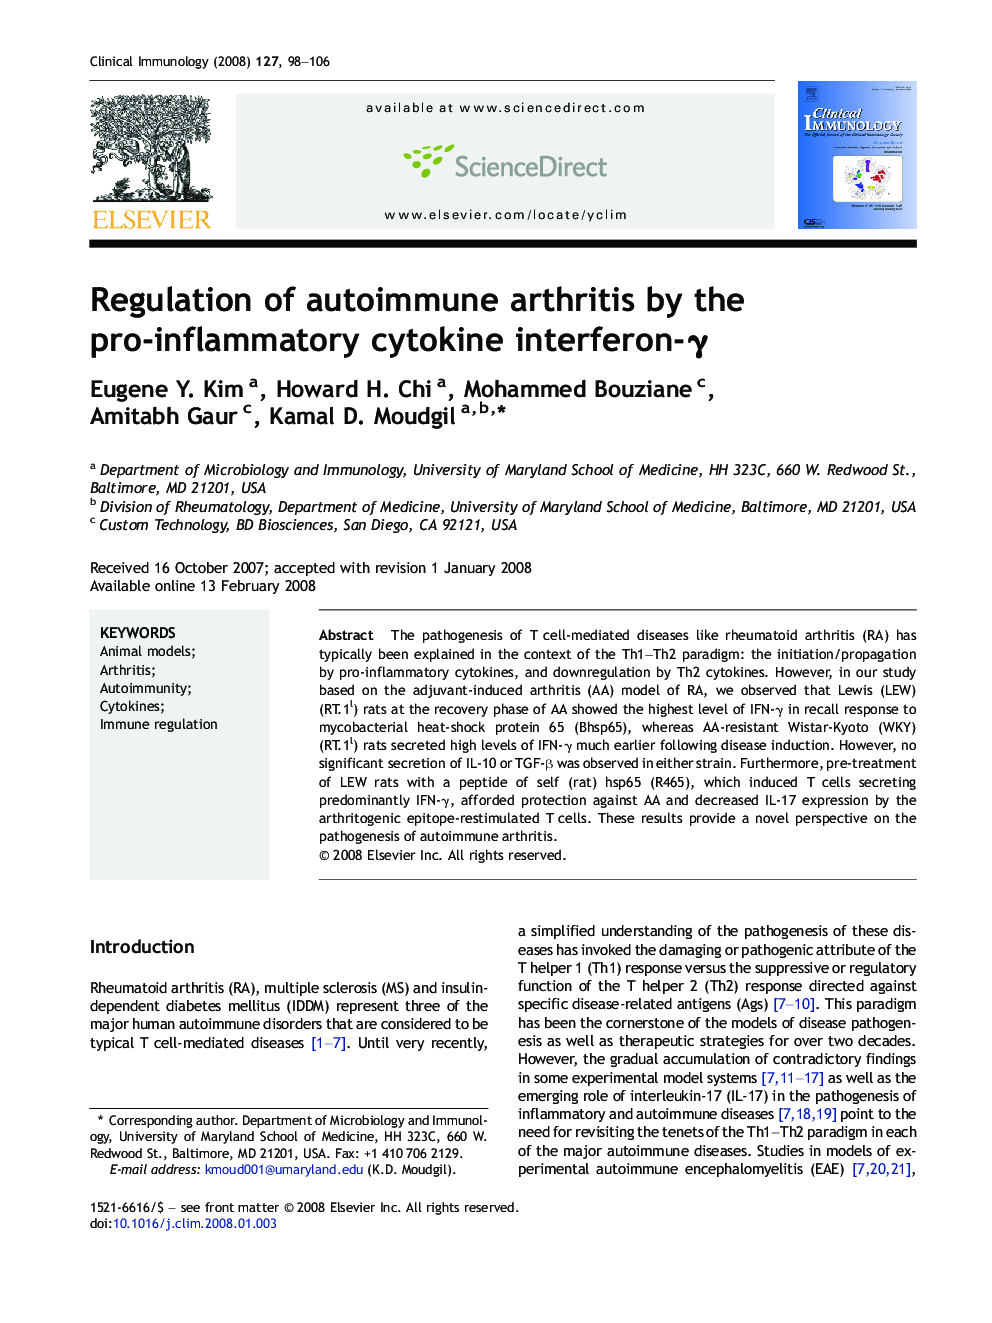 Regulation of autoimmune arthritis by the pro-inflammatory cytokine interferon-γ